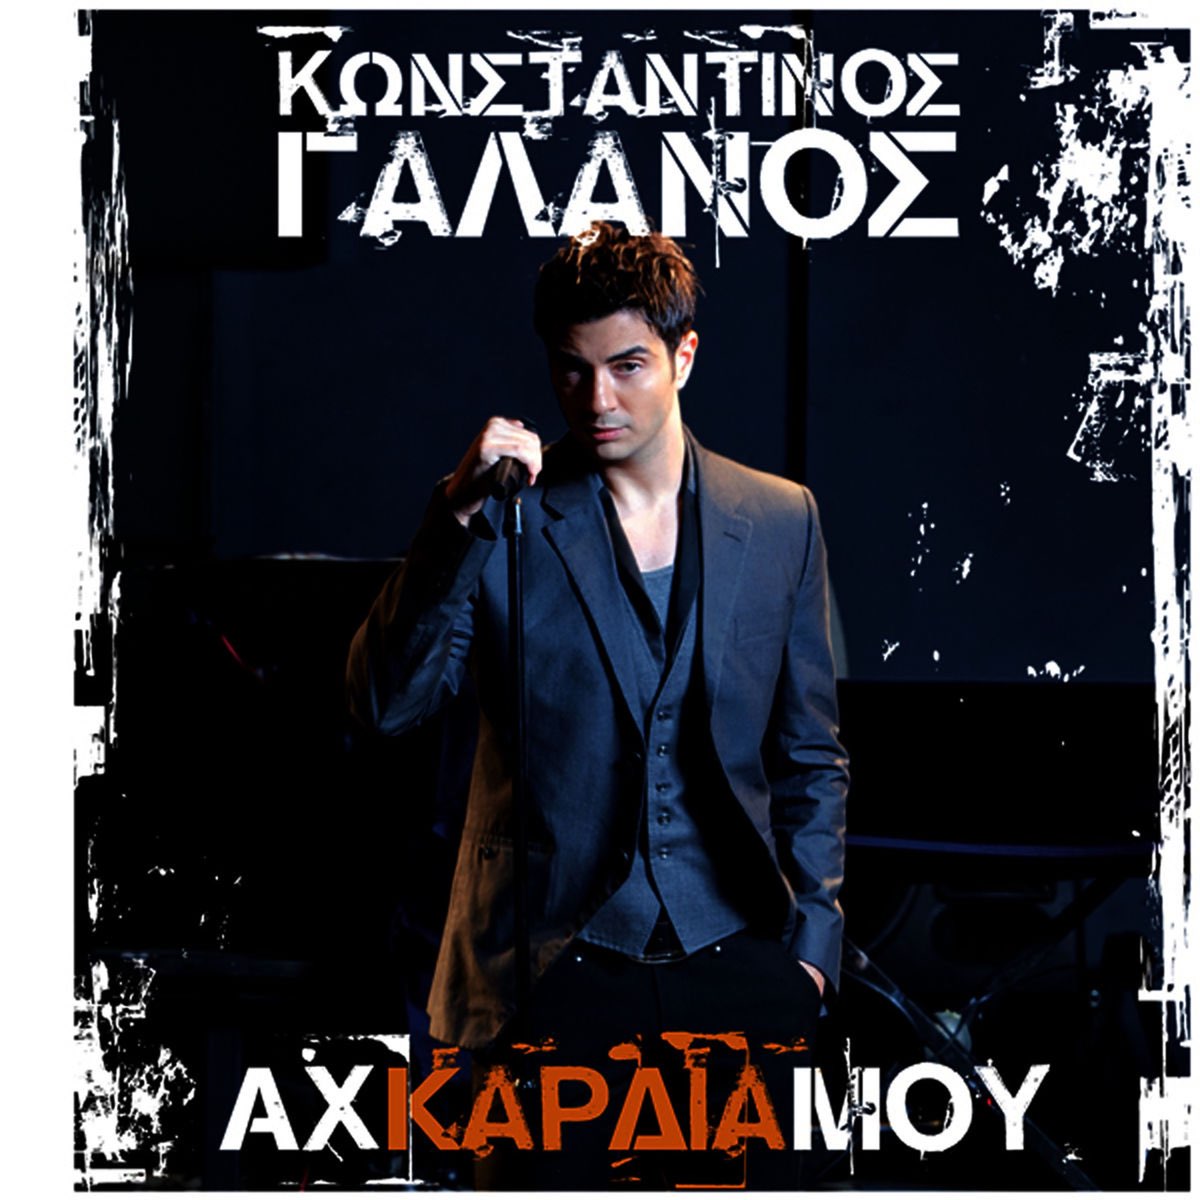 Ah Kardia Mou by Konstantinos Galanos on Apple Music